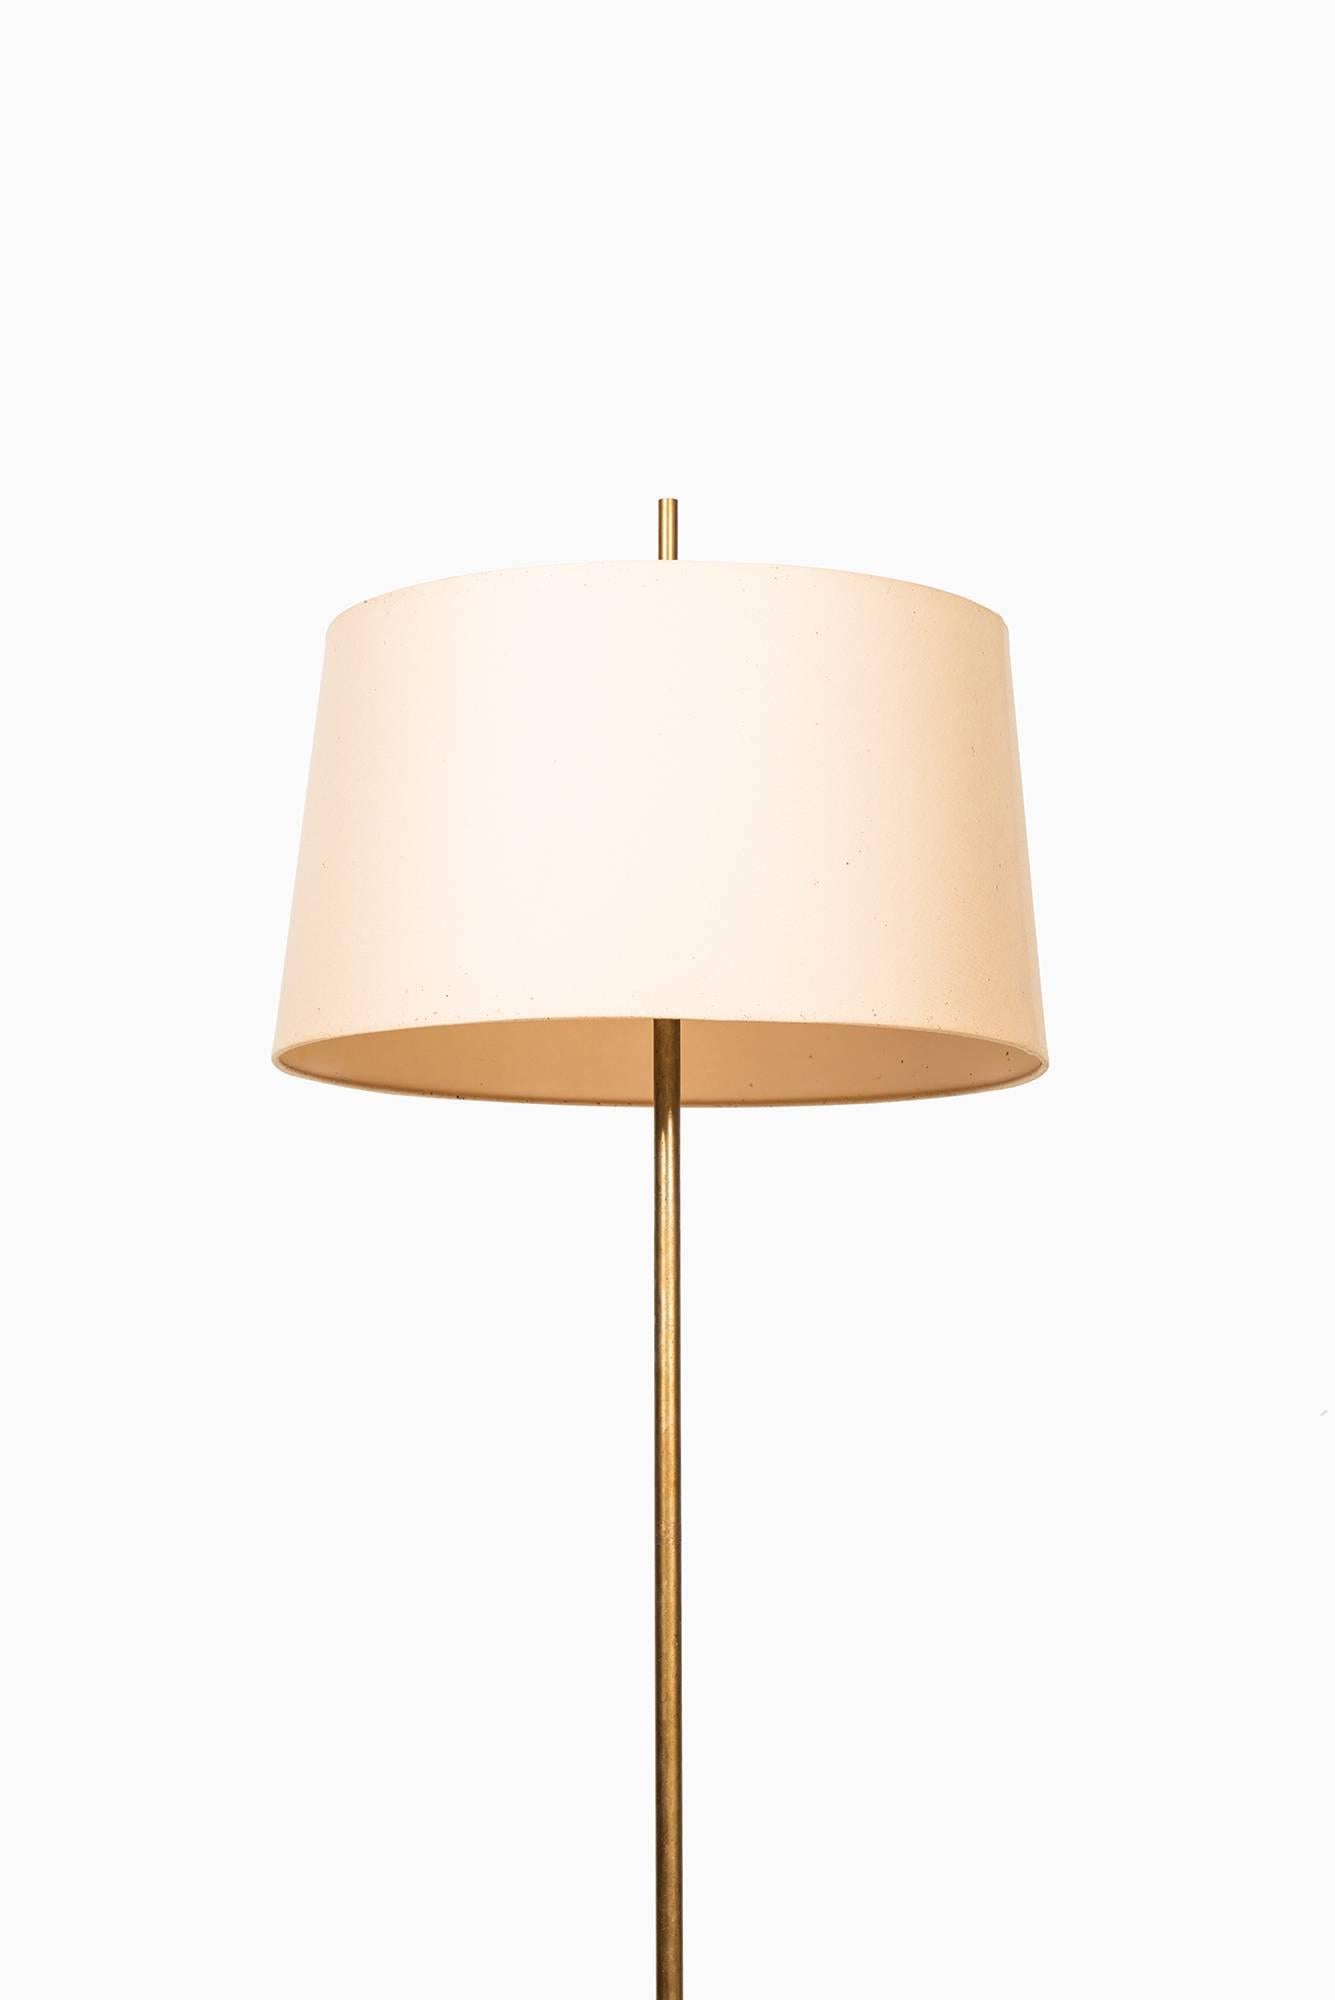 Rare floor lamp designed by Svend Aage Holm Sørensen. Produced by Holm Sørensen & Co in Denmark.